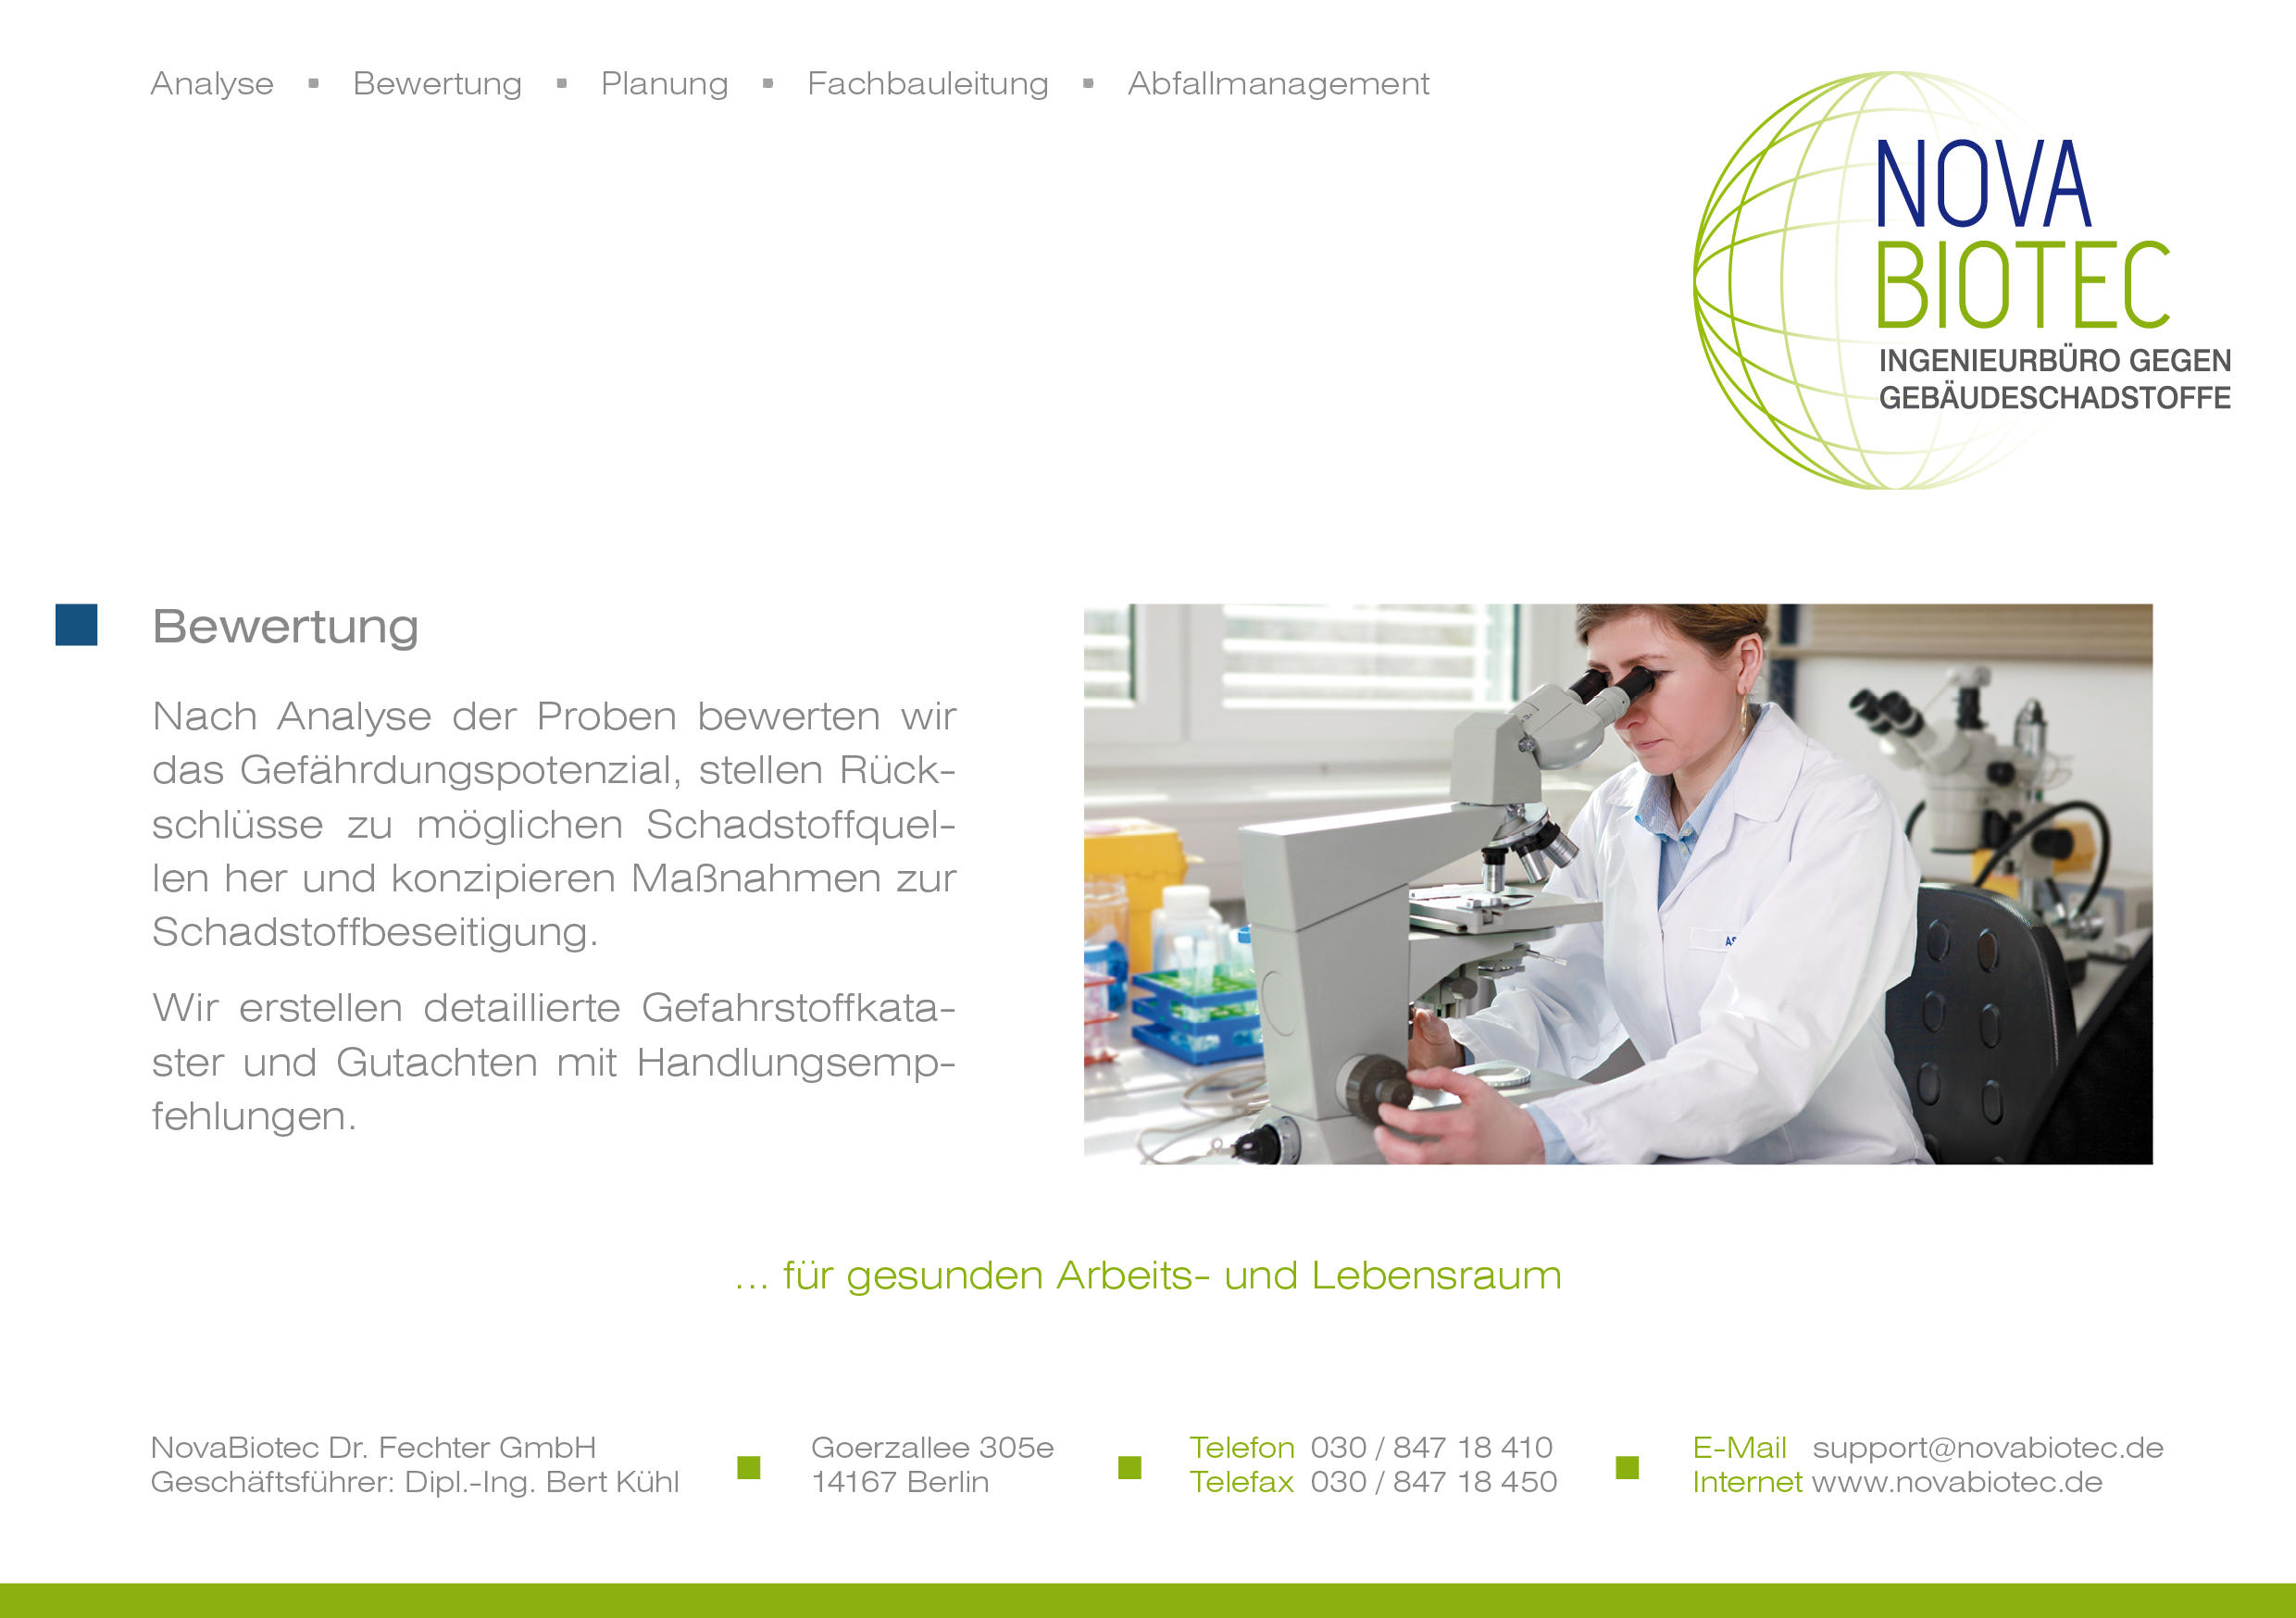 NovaBiotec Dr. Fechter GmbH, Goerzallee 305e in Berlin